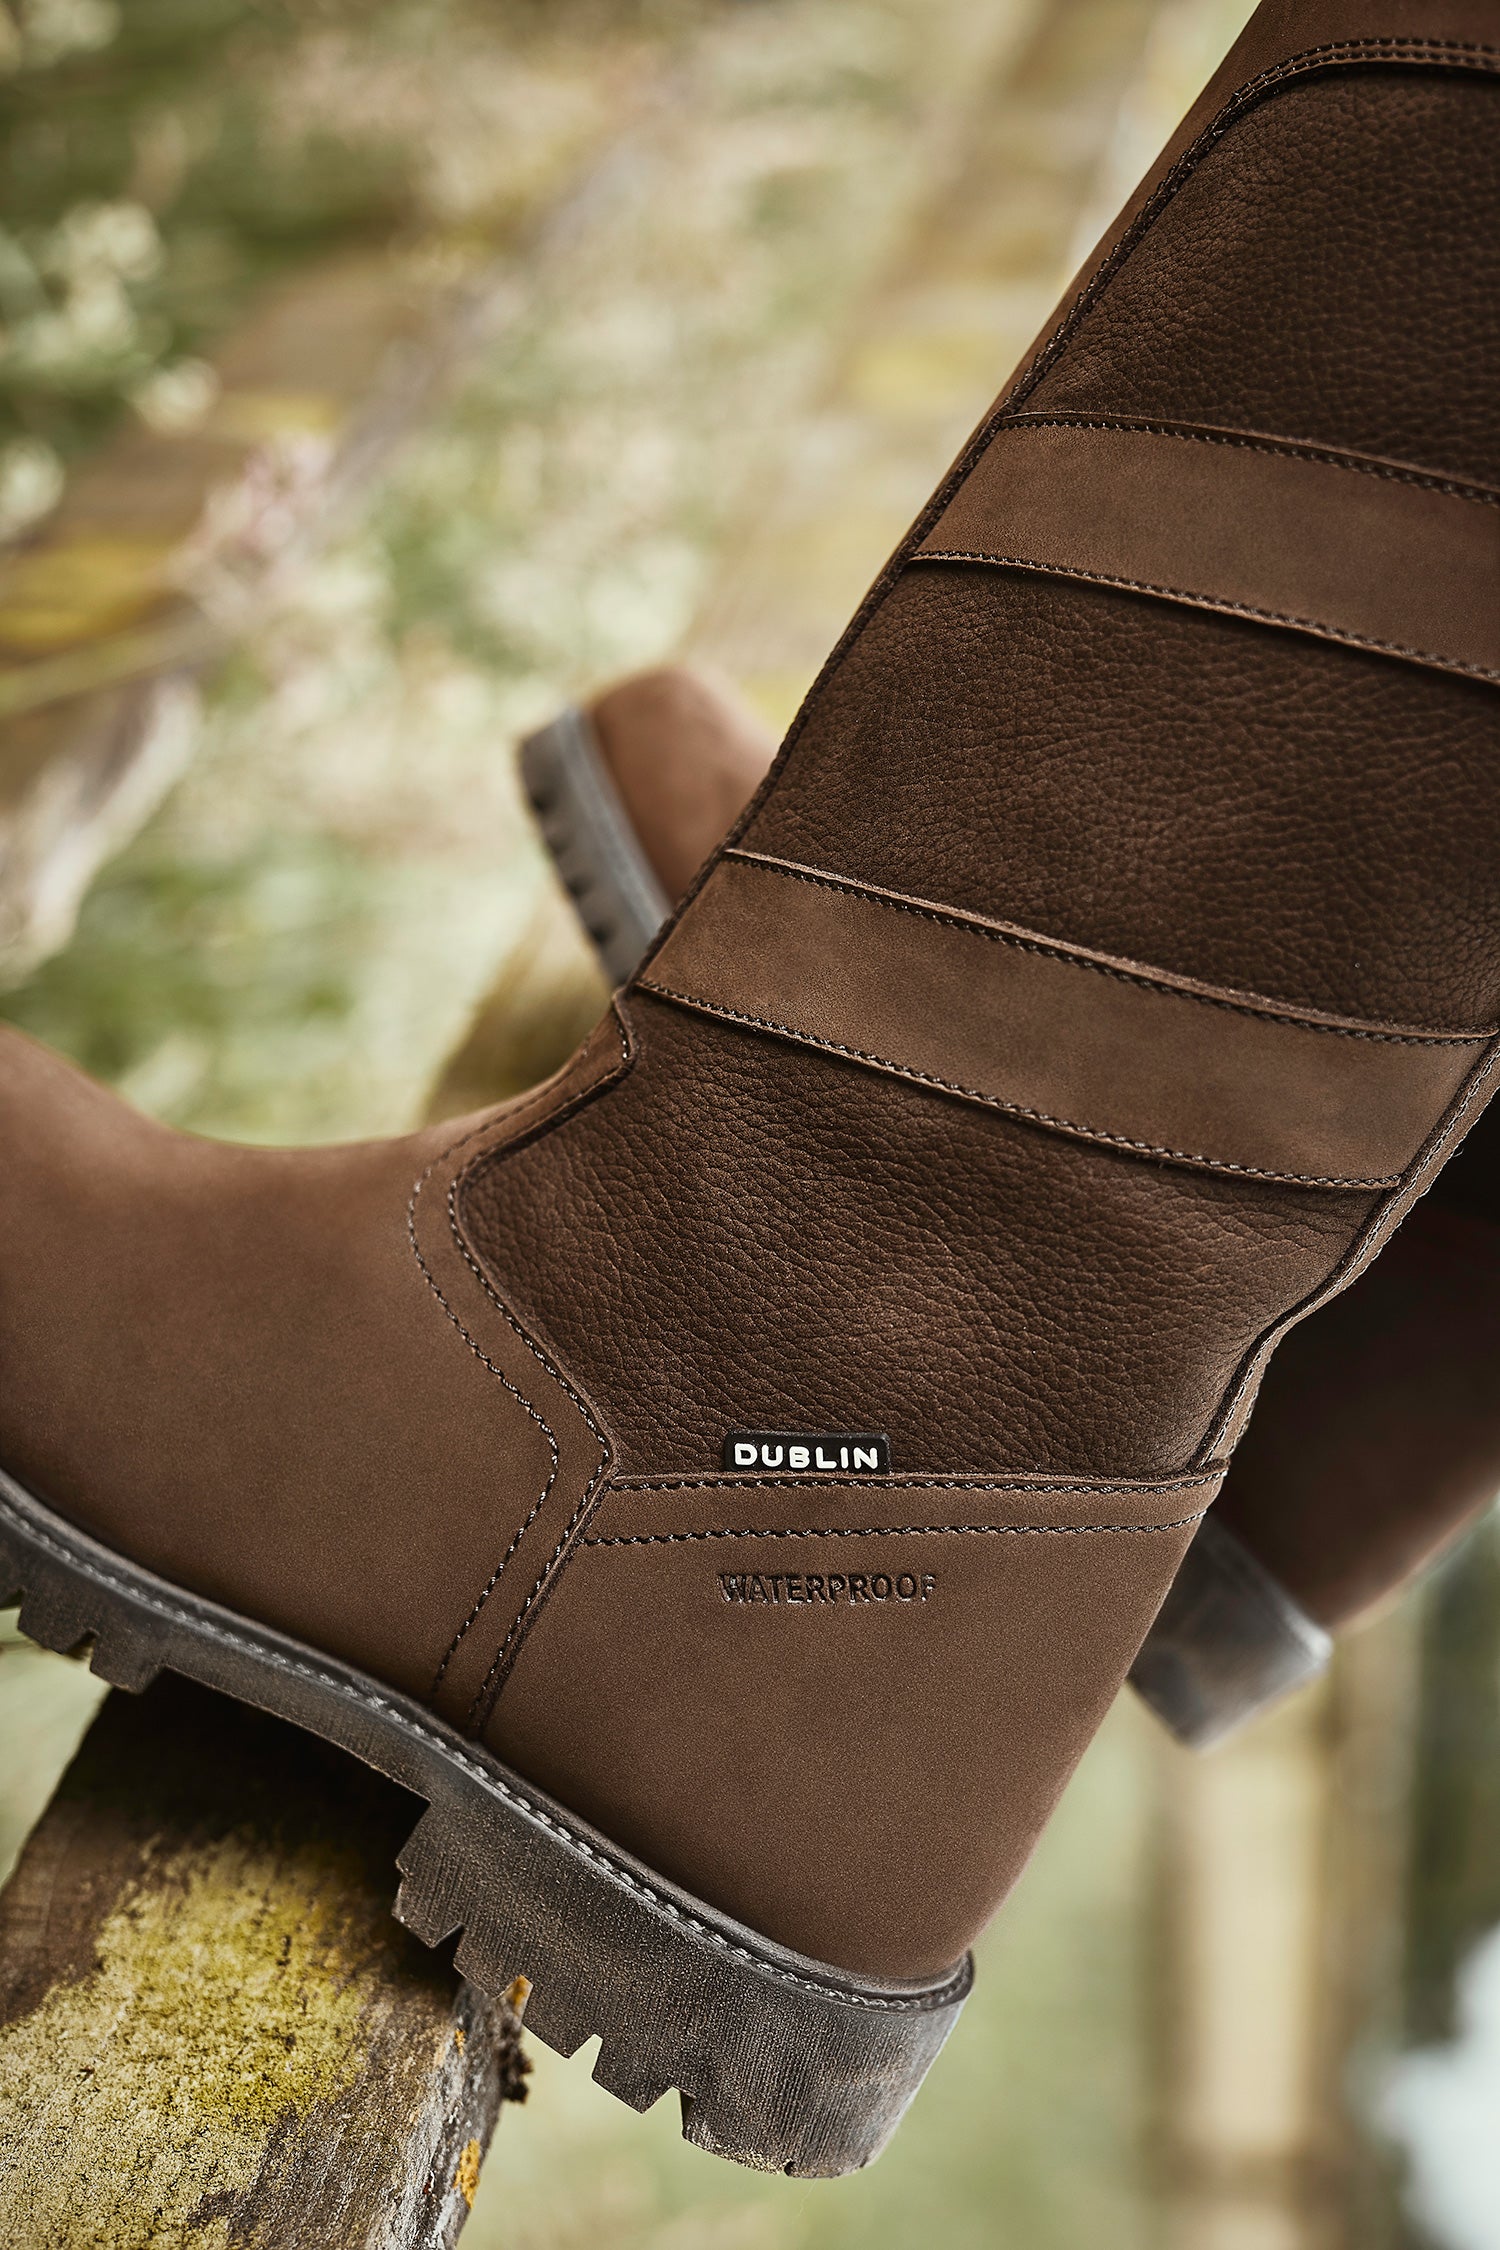 Heel detail showing leather grain and waterproof logo